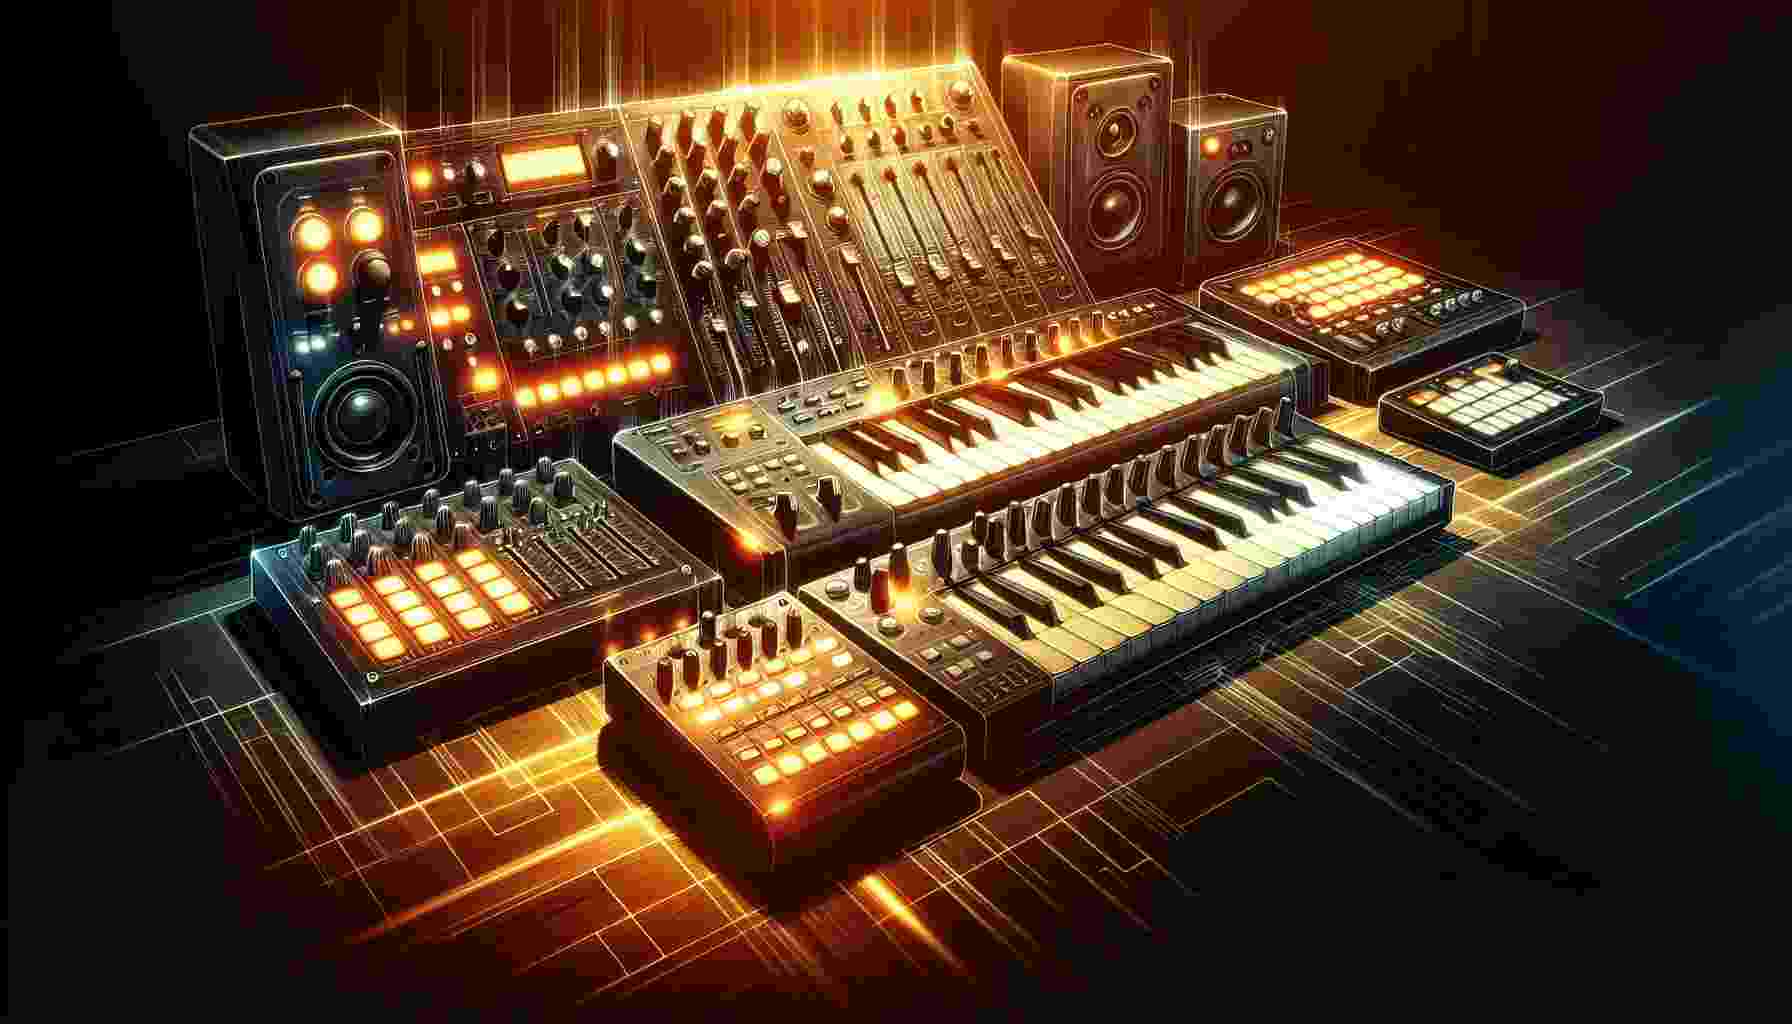 Creative illustration of electronic music production equipment